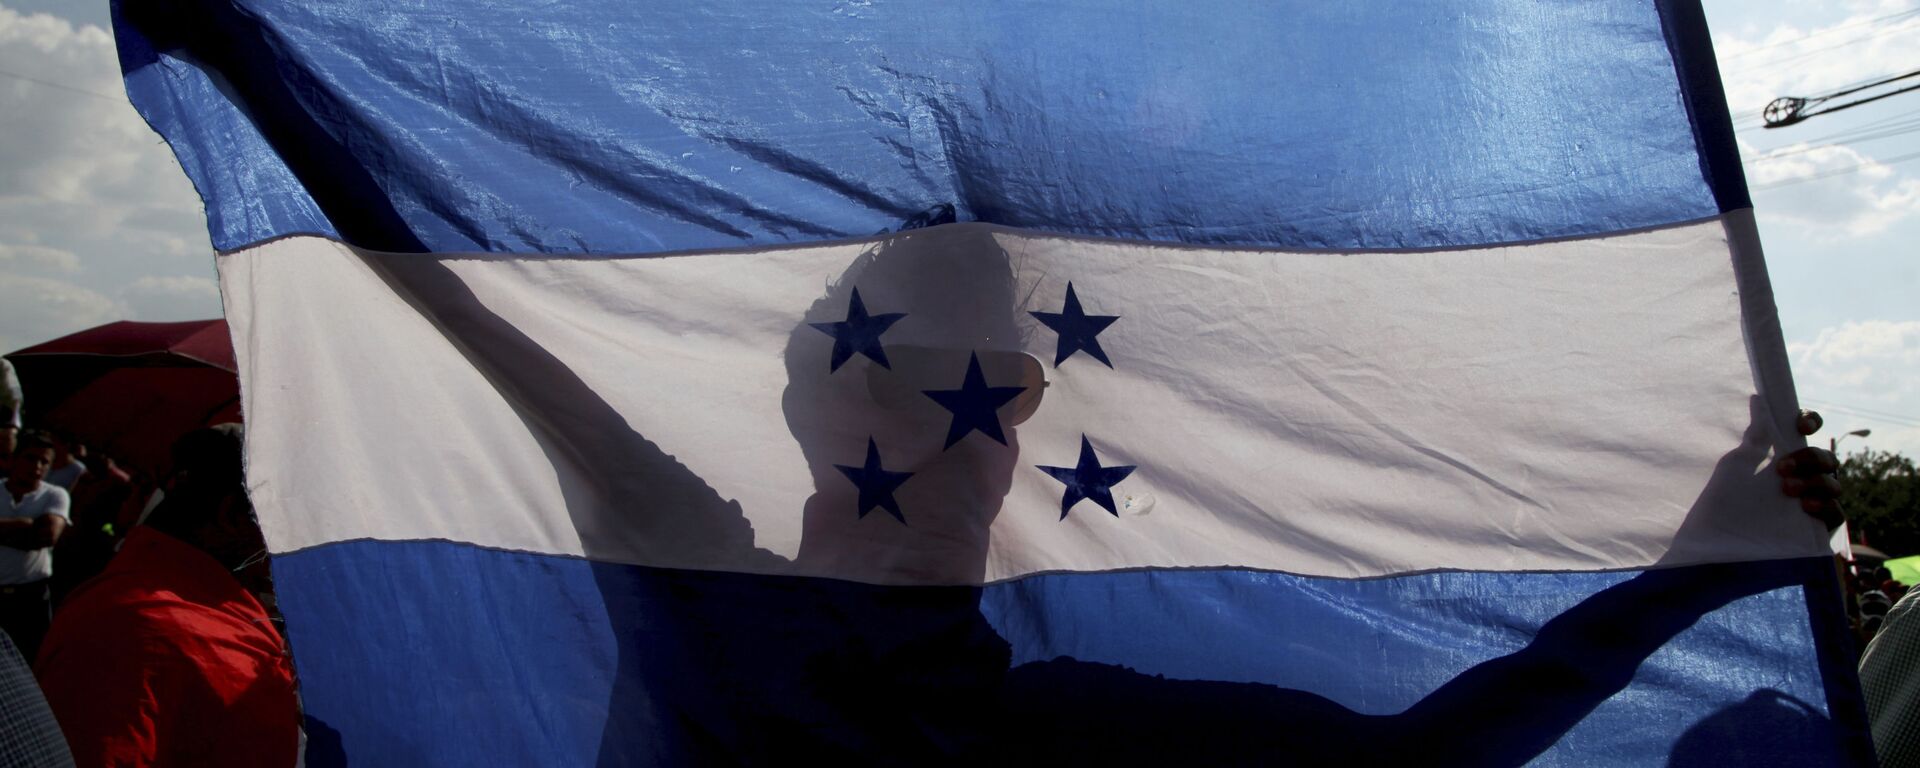 Bandera de Honduras - Sputnik Mundo, 1920, 18.05.2021